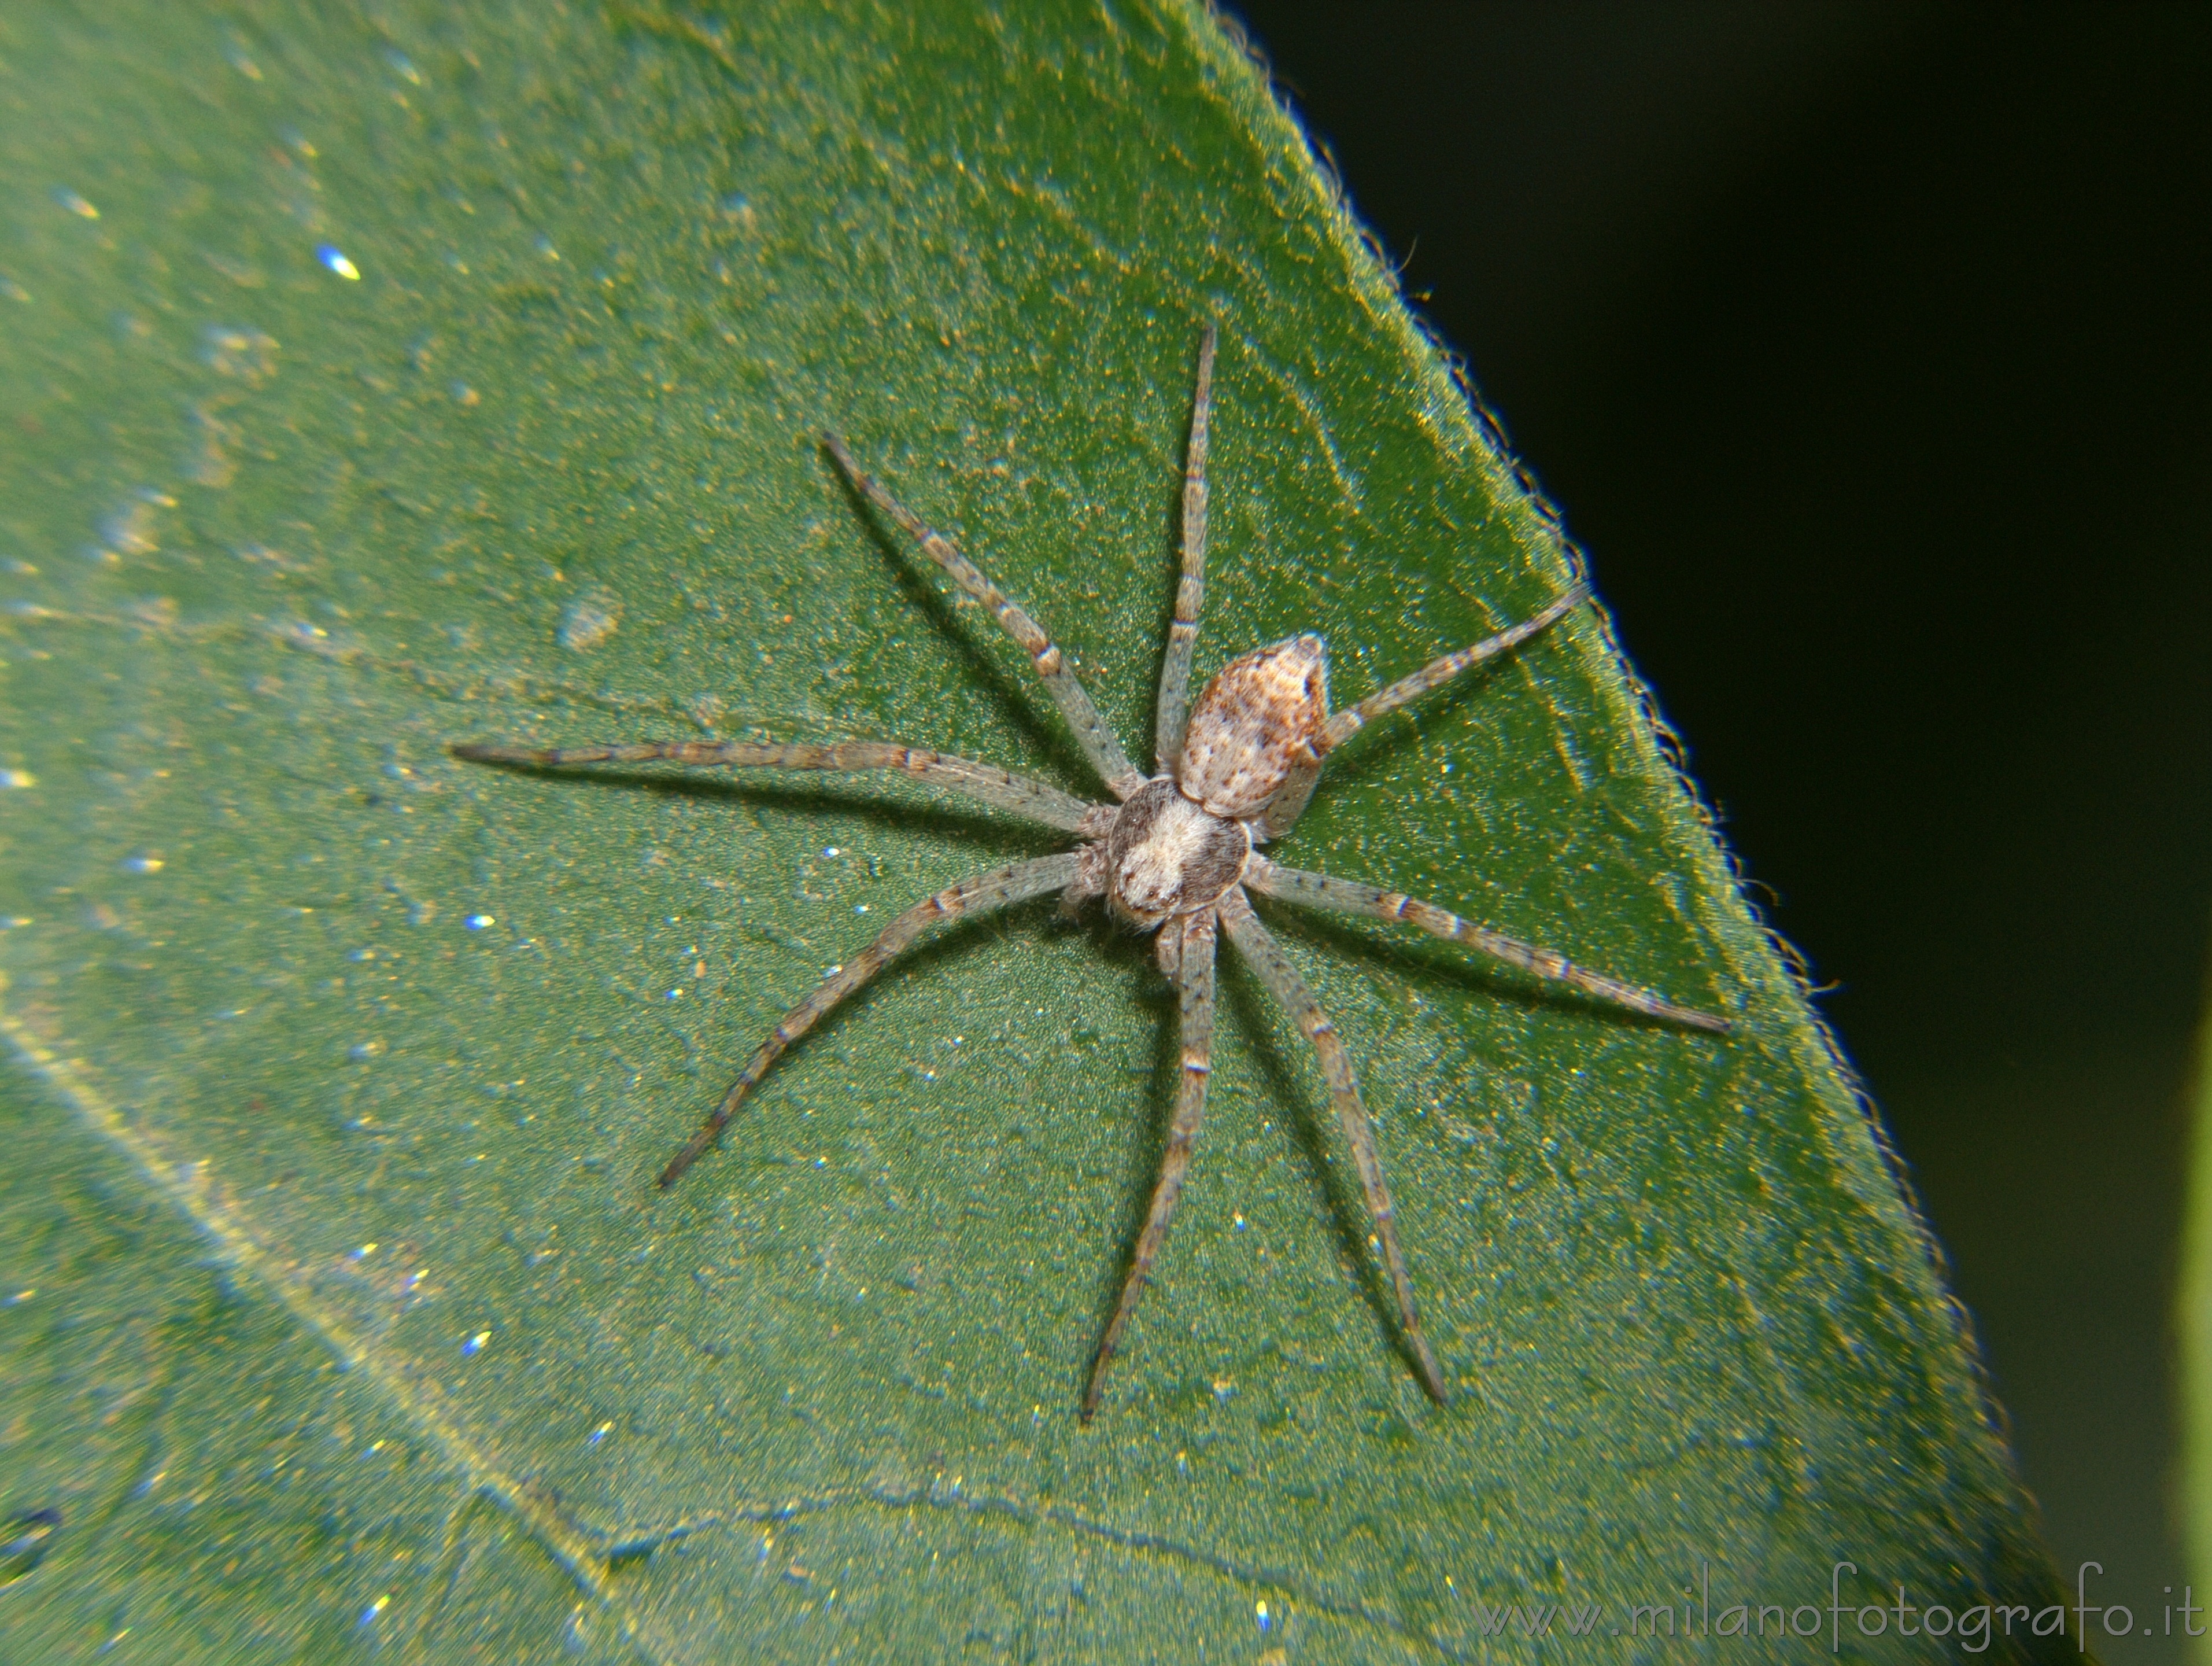 Cadrezzate (Varese, Italy): Small spider - Cadrezzate (Varese, Italy)